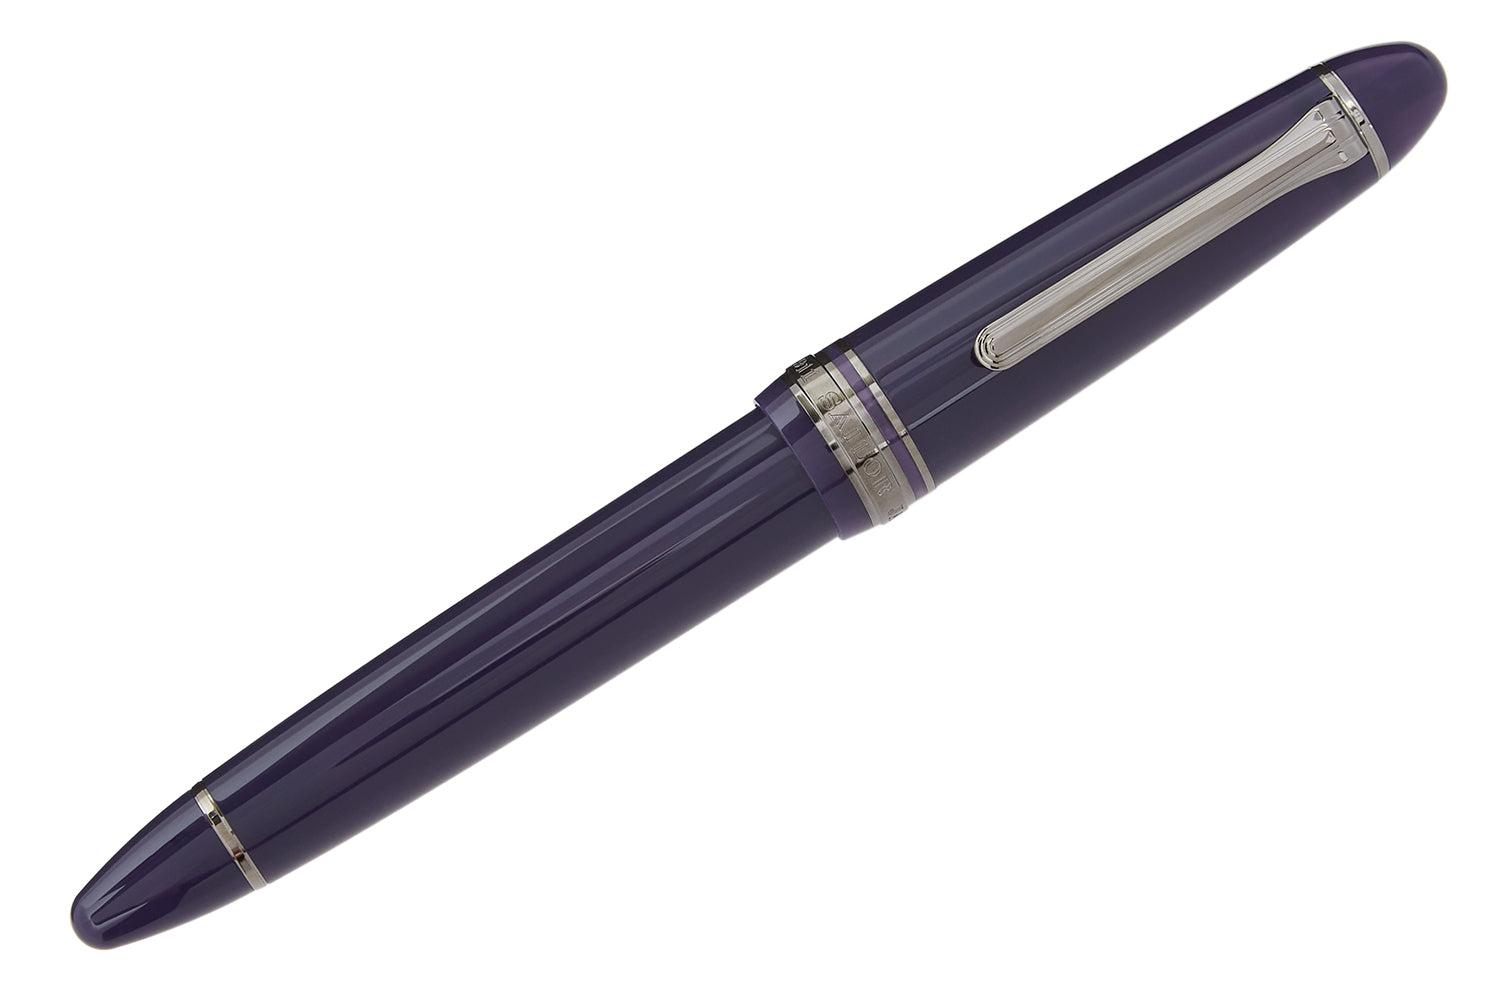 Colarr 24 Pcs Western Pens Smooth Writing Ballpoint Black